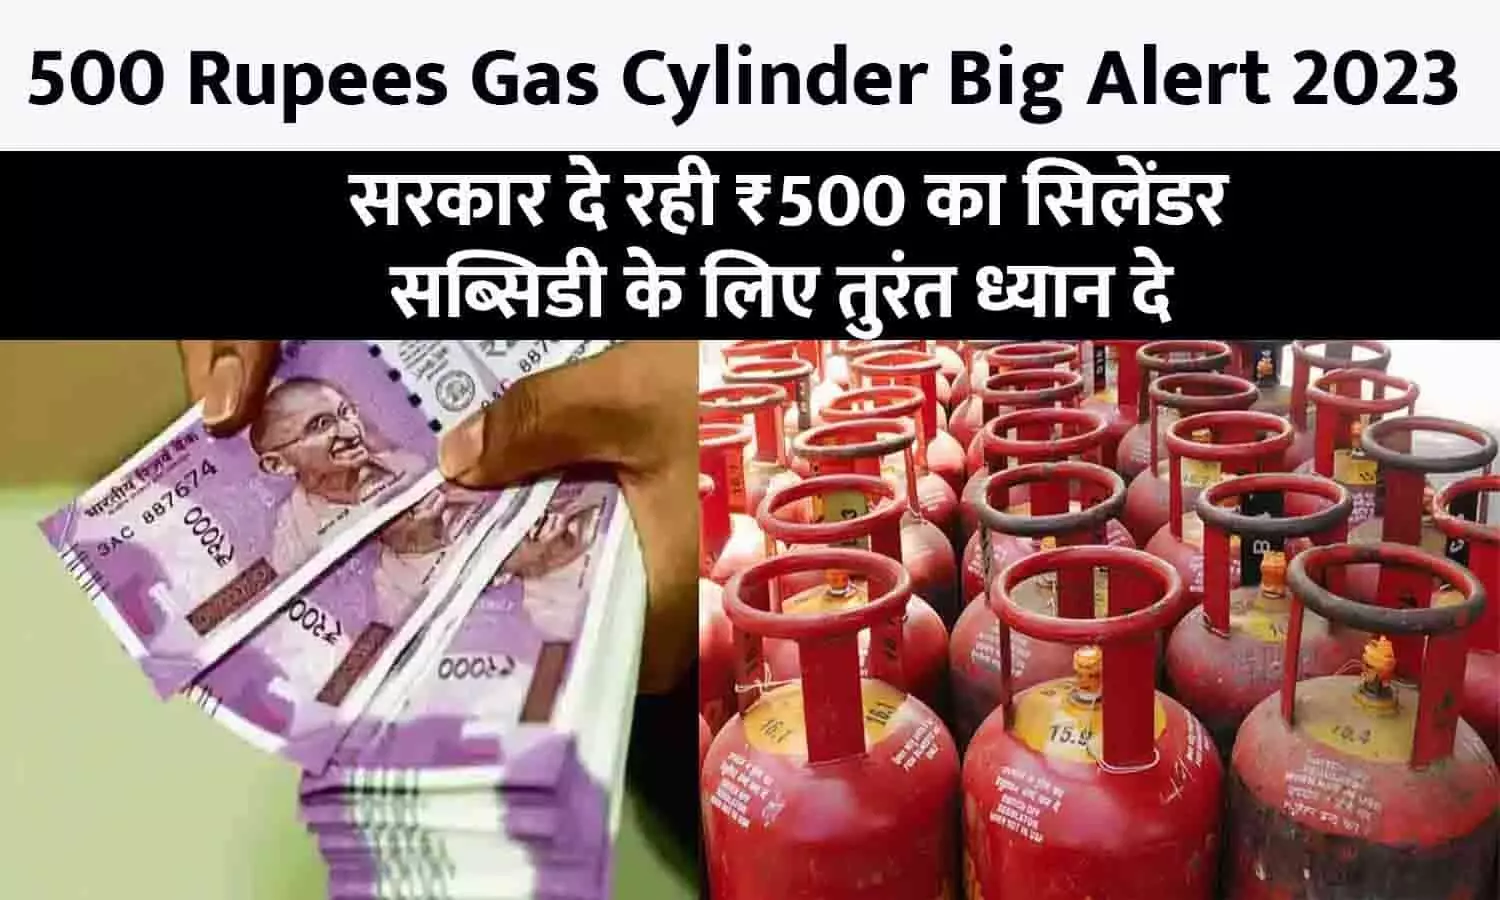 500 Rupees Gas Cylinder Big Alert 2023: सरकार दे रही ₹500 का सिलेंडर, सब्सिडी के लिए तुरंत ध्यान दे